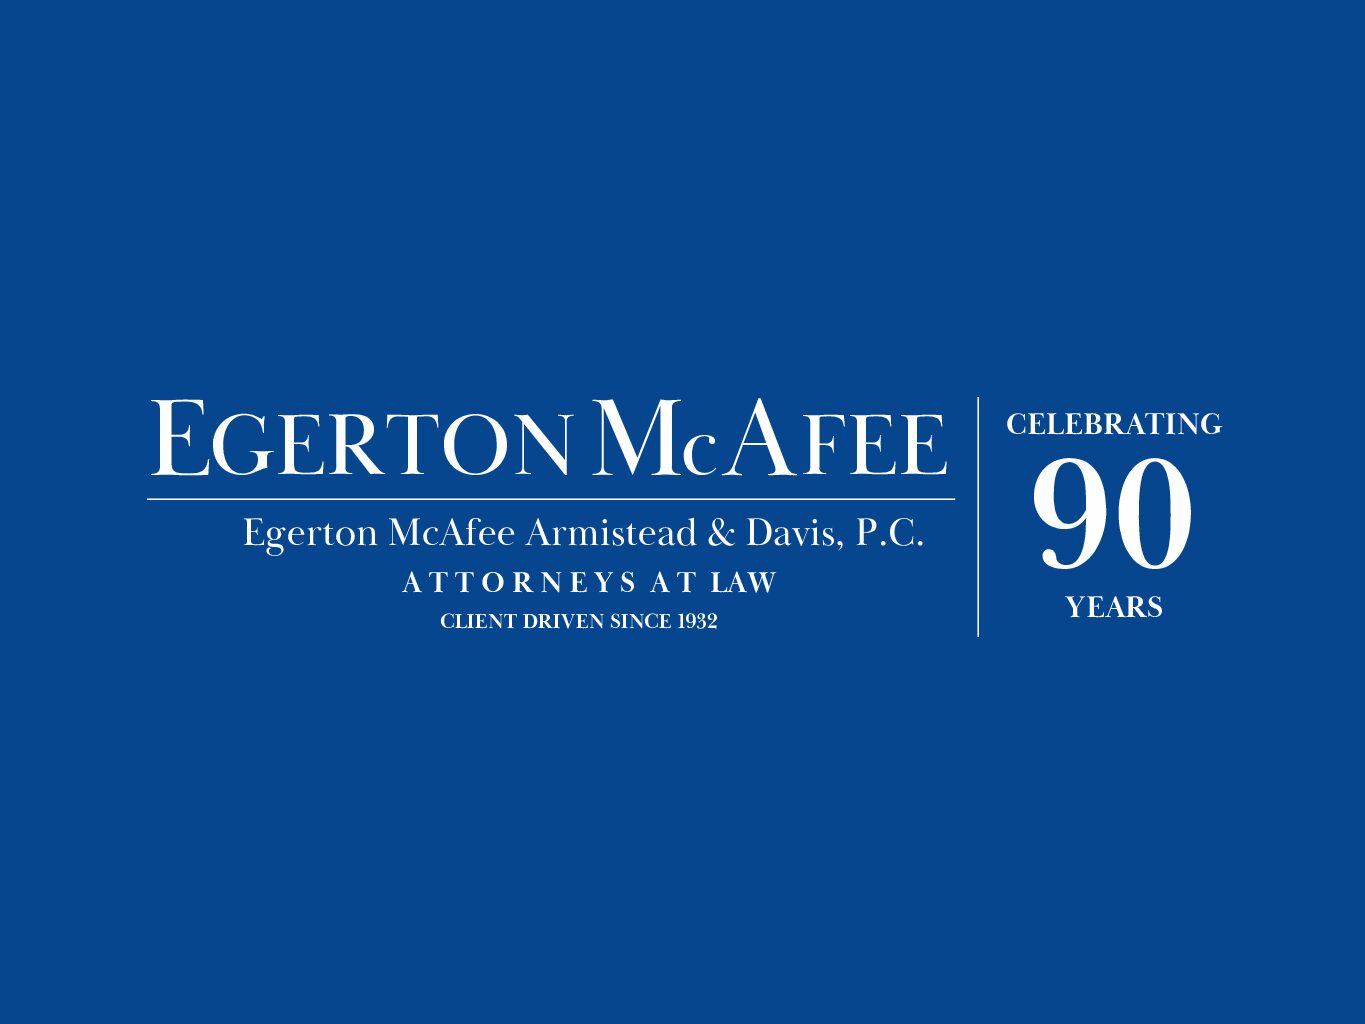 Egerton, McAfee, Armistead & Davis, P.C. 90th Anniversary Logo Announcement